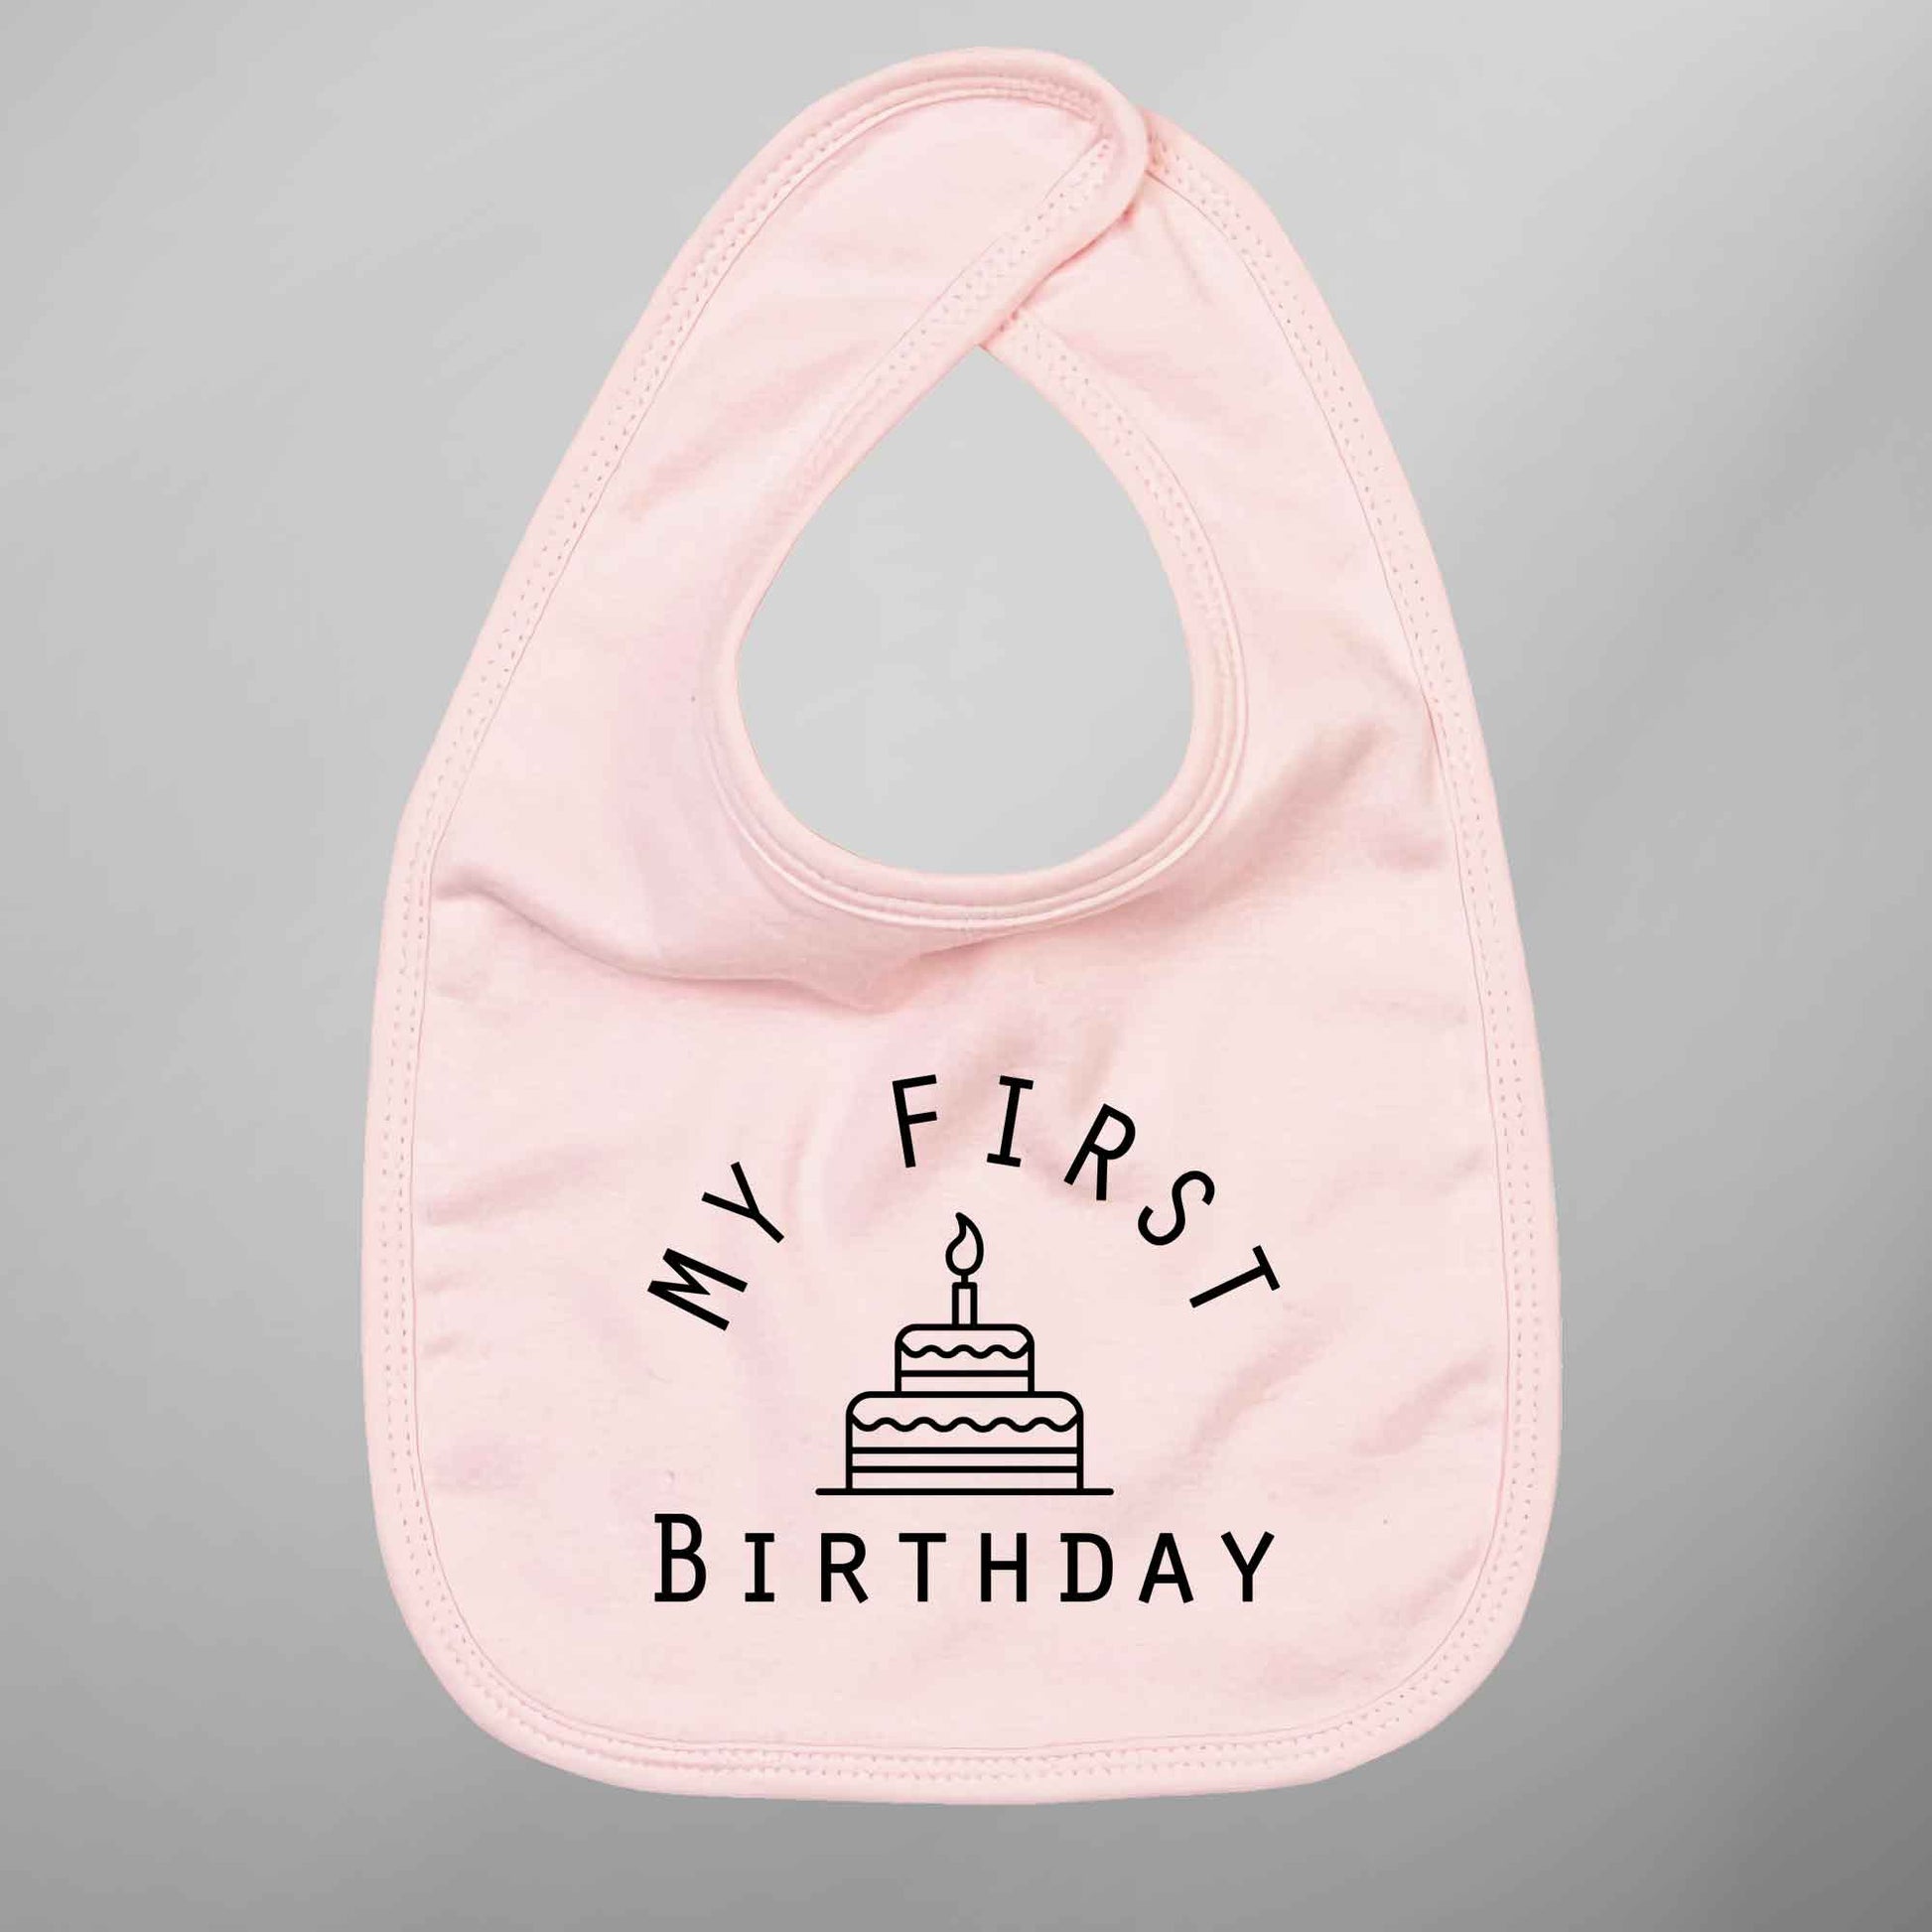 Baby Bib My First Birthday Bib 1st Birthday Baby Gift - FLUX DESIGNS